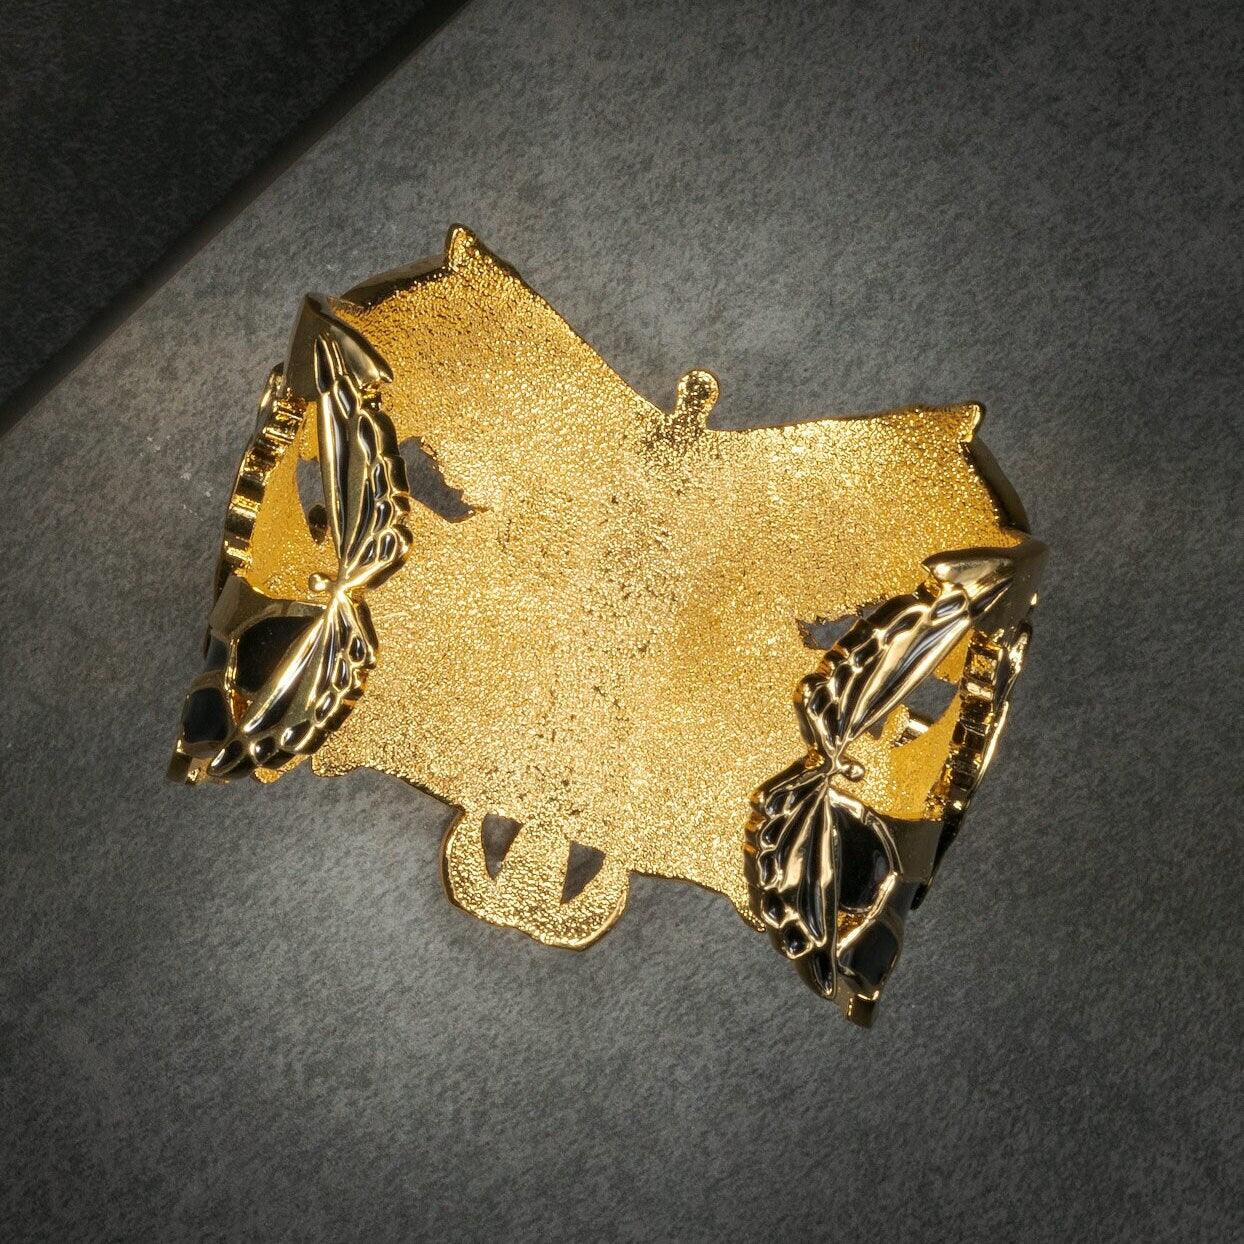 Unique Cuff Bracelet "Soaring" - Gold & Black Gift, Gift For Mom, Artistic, Jewelry Cuff, Bracelet, Gold, Silver, Brass